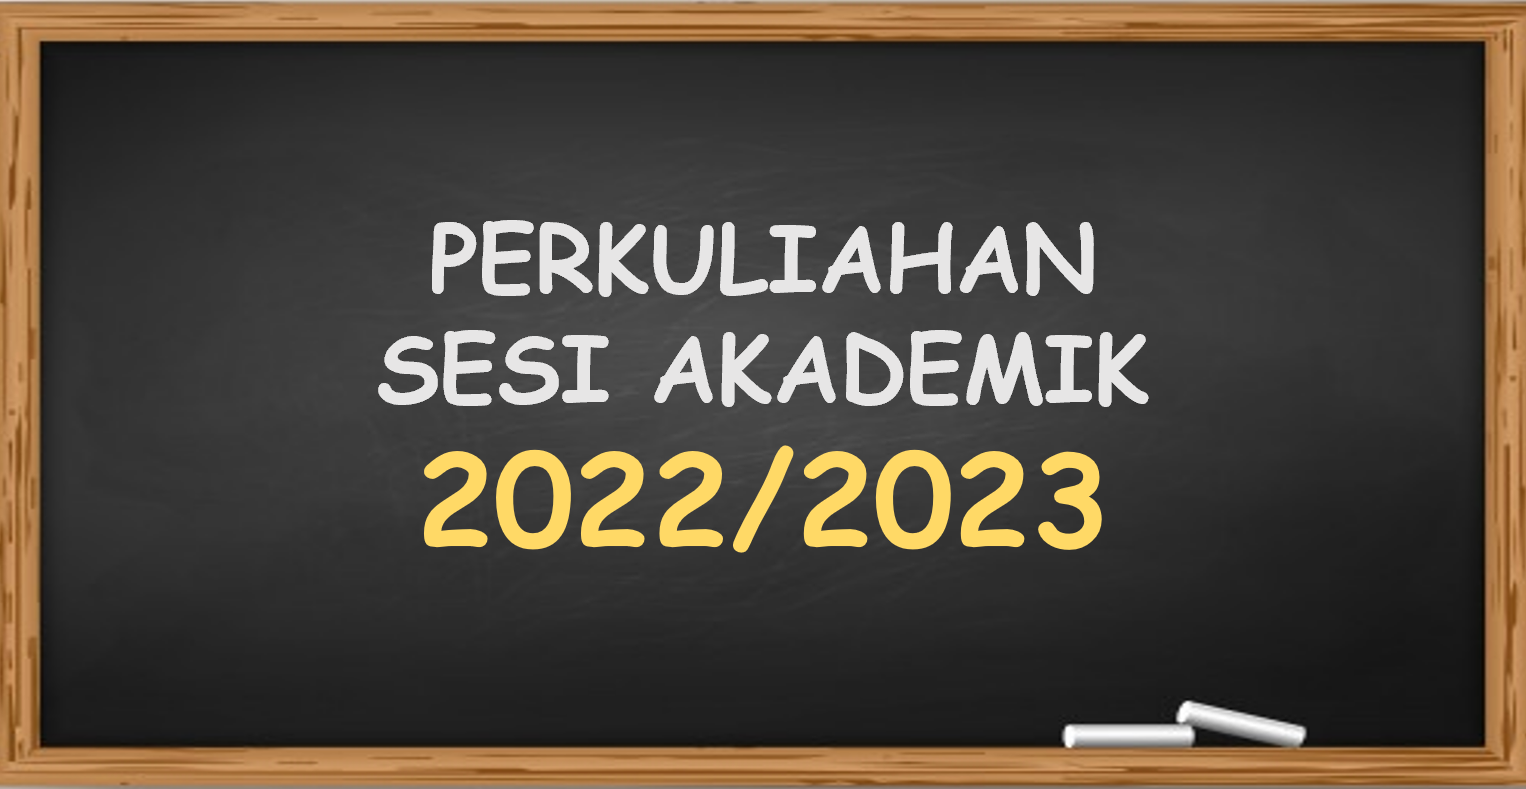 http://www.kupu-sb.edu.bn/SiteCollectionImages/makluman/PERKULIAHAN%2022-23.png